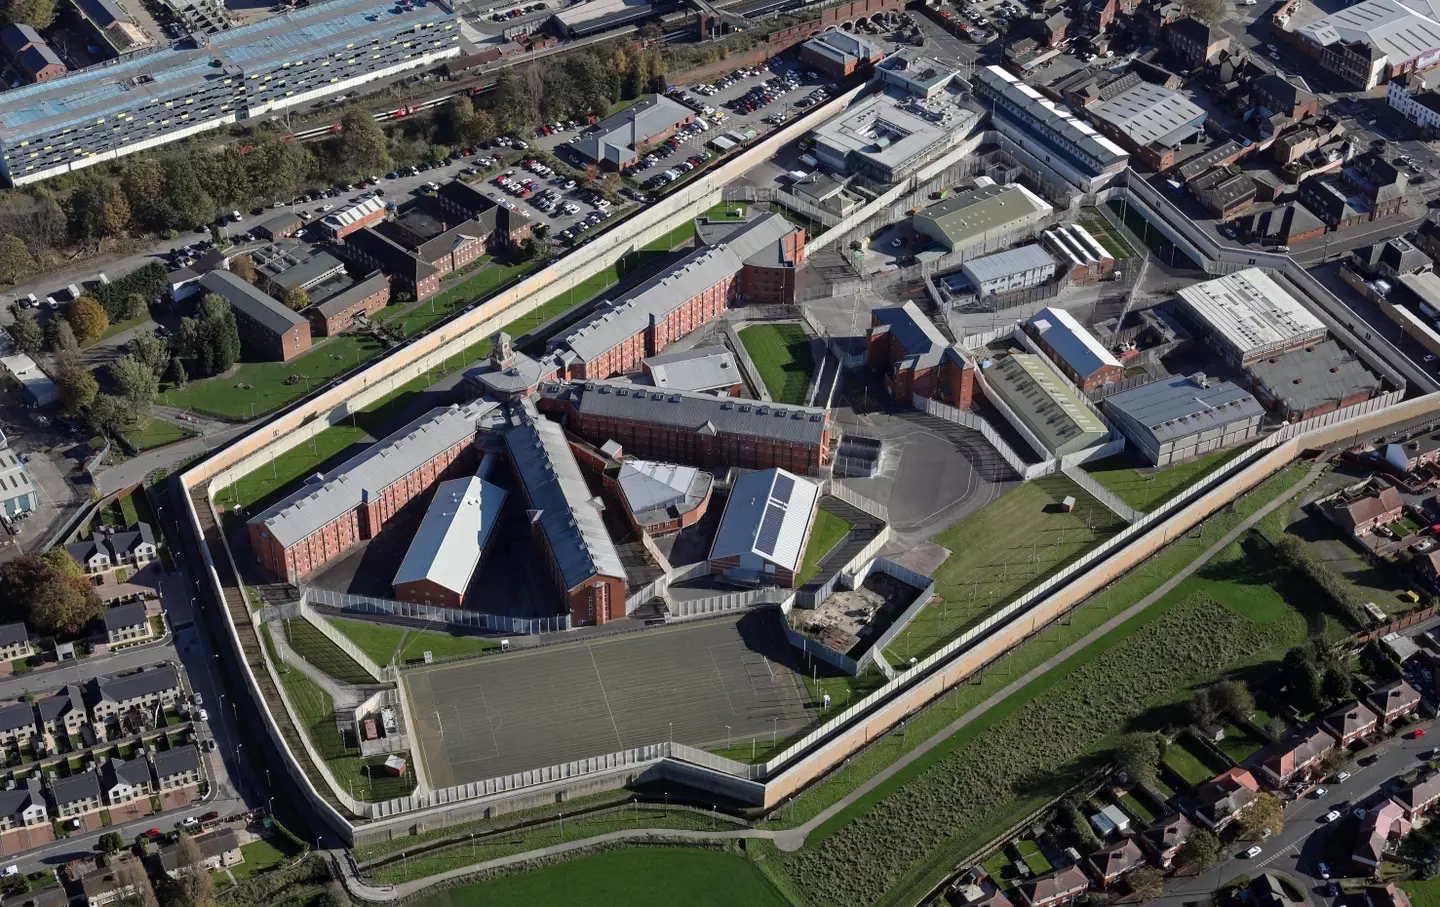 Britain's most dangerous serial killer is held at Wakefield Prison.